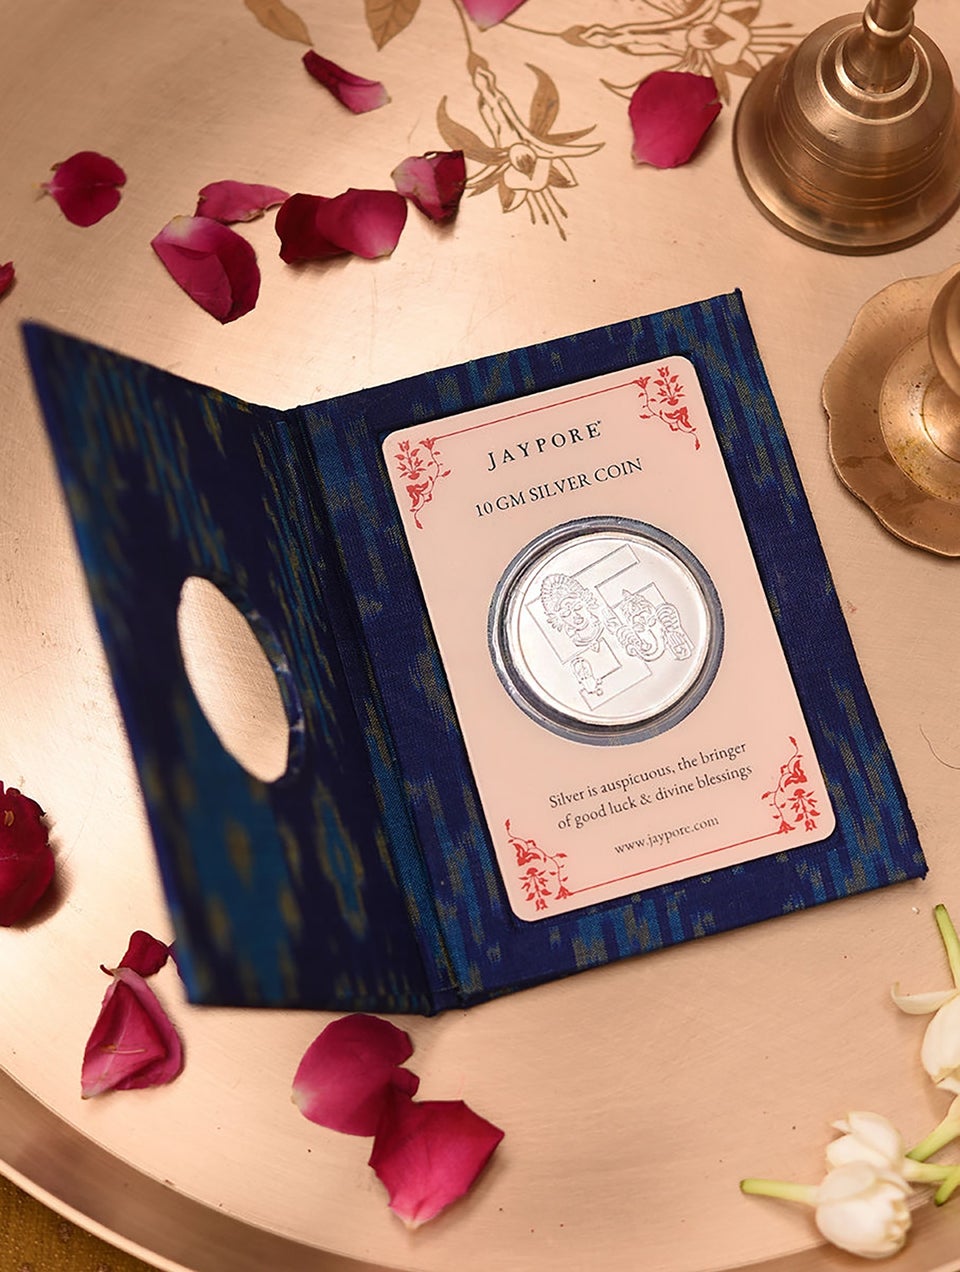 Laxmi Ganesha Silver Coin